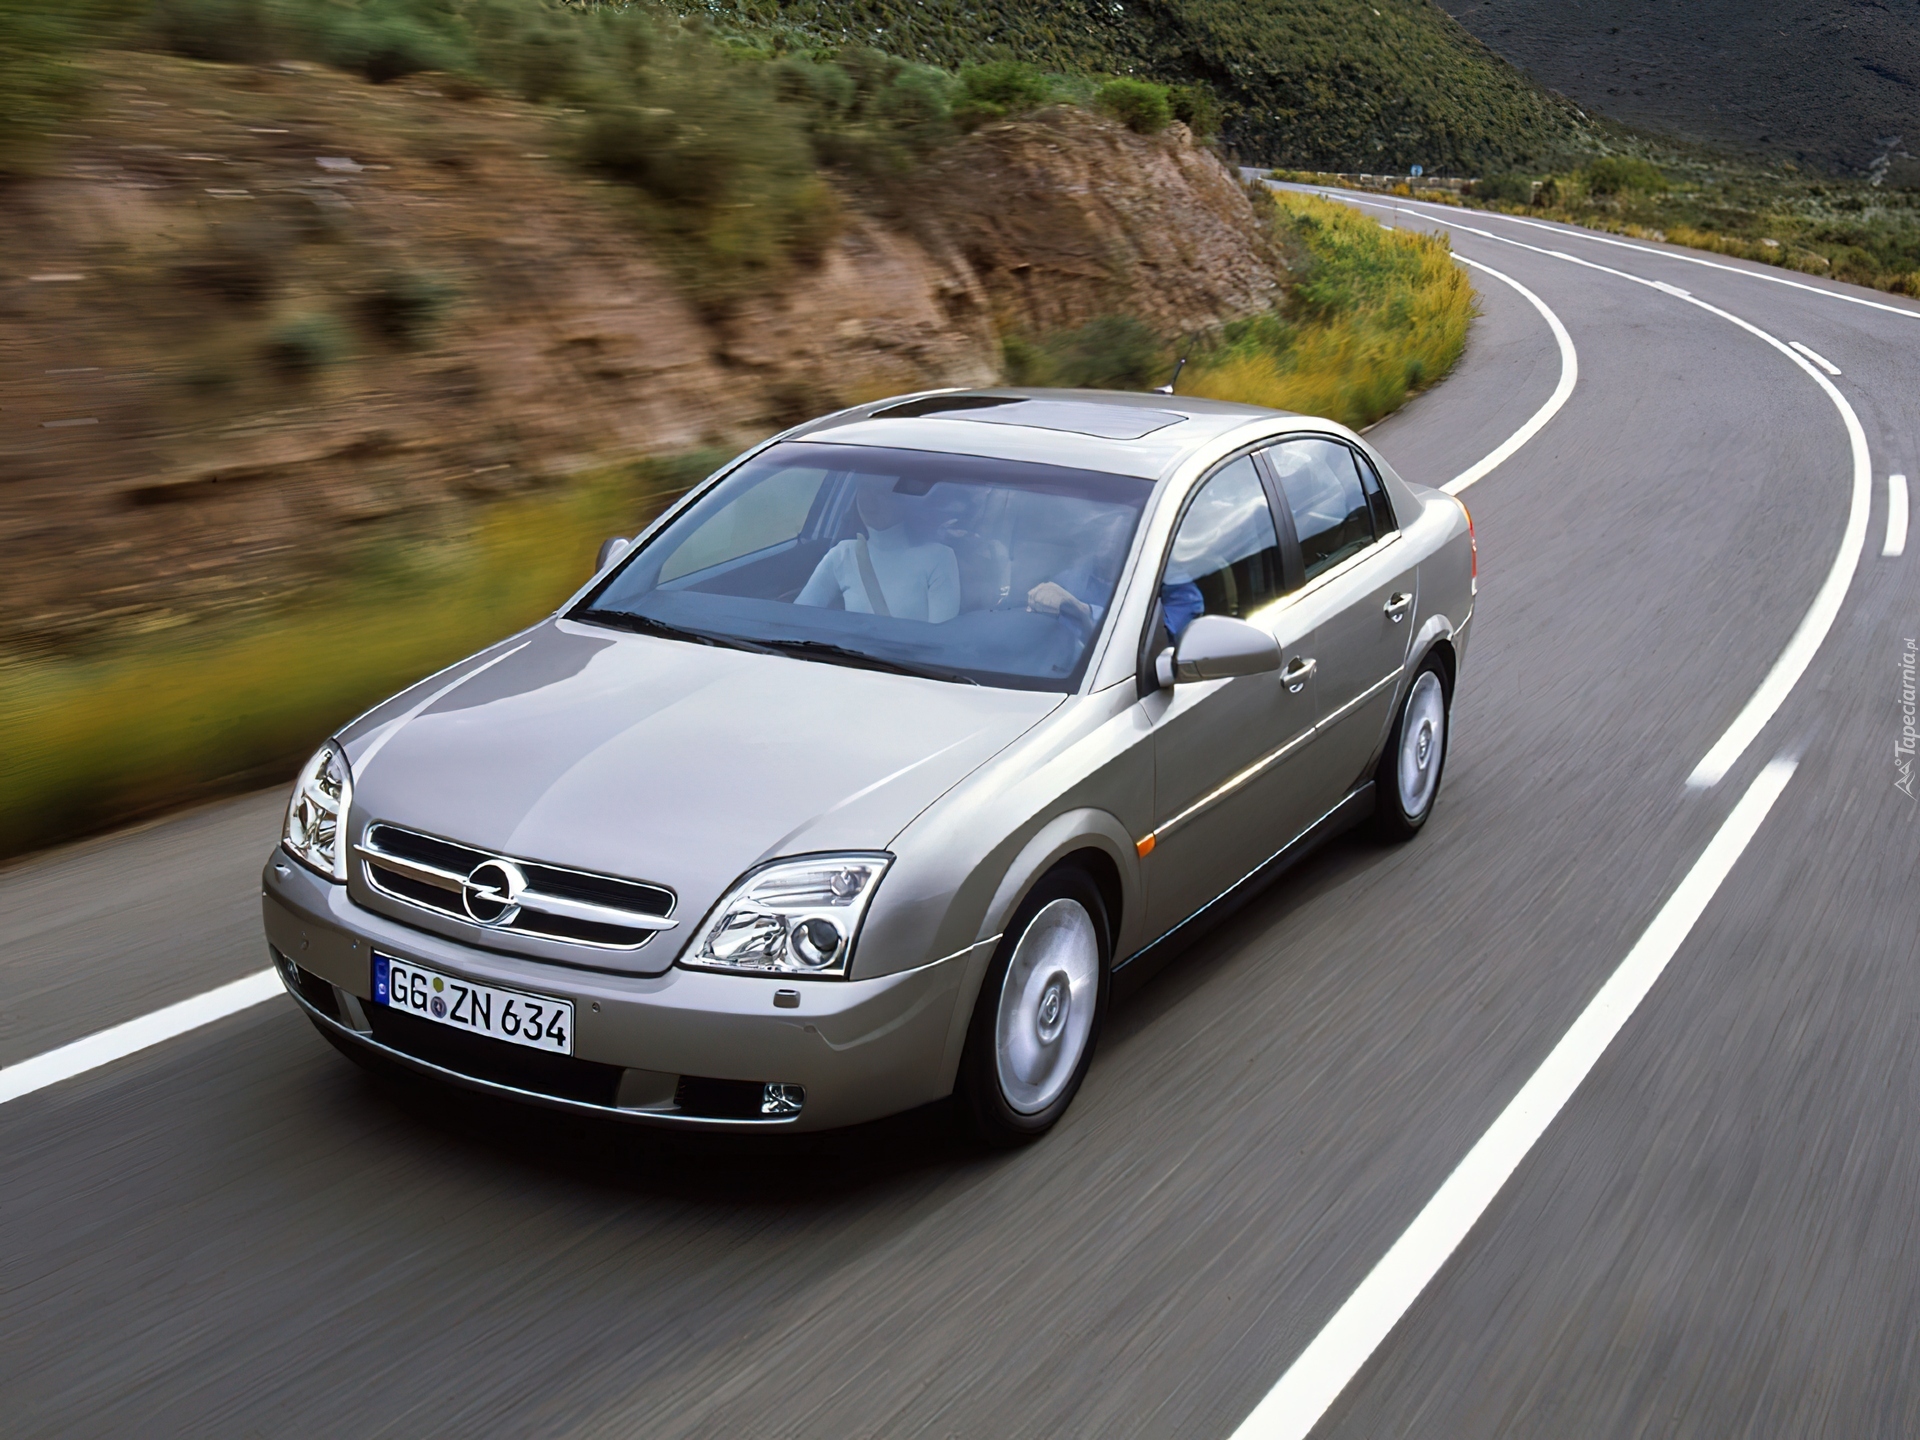 Автомобиль вектра б. Opel Vectra c 2002. Опель Вектра седан 2002. Opel Vectra c 2.2. Опель Вектра ц 2002.